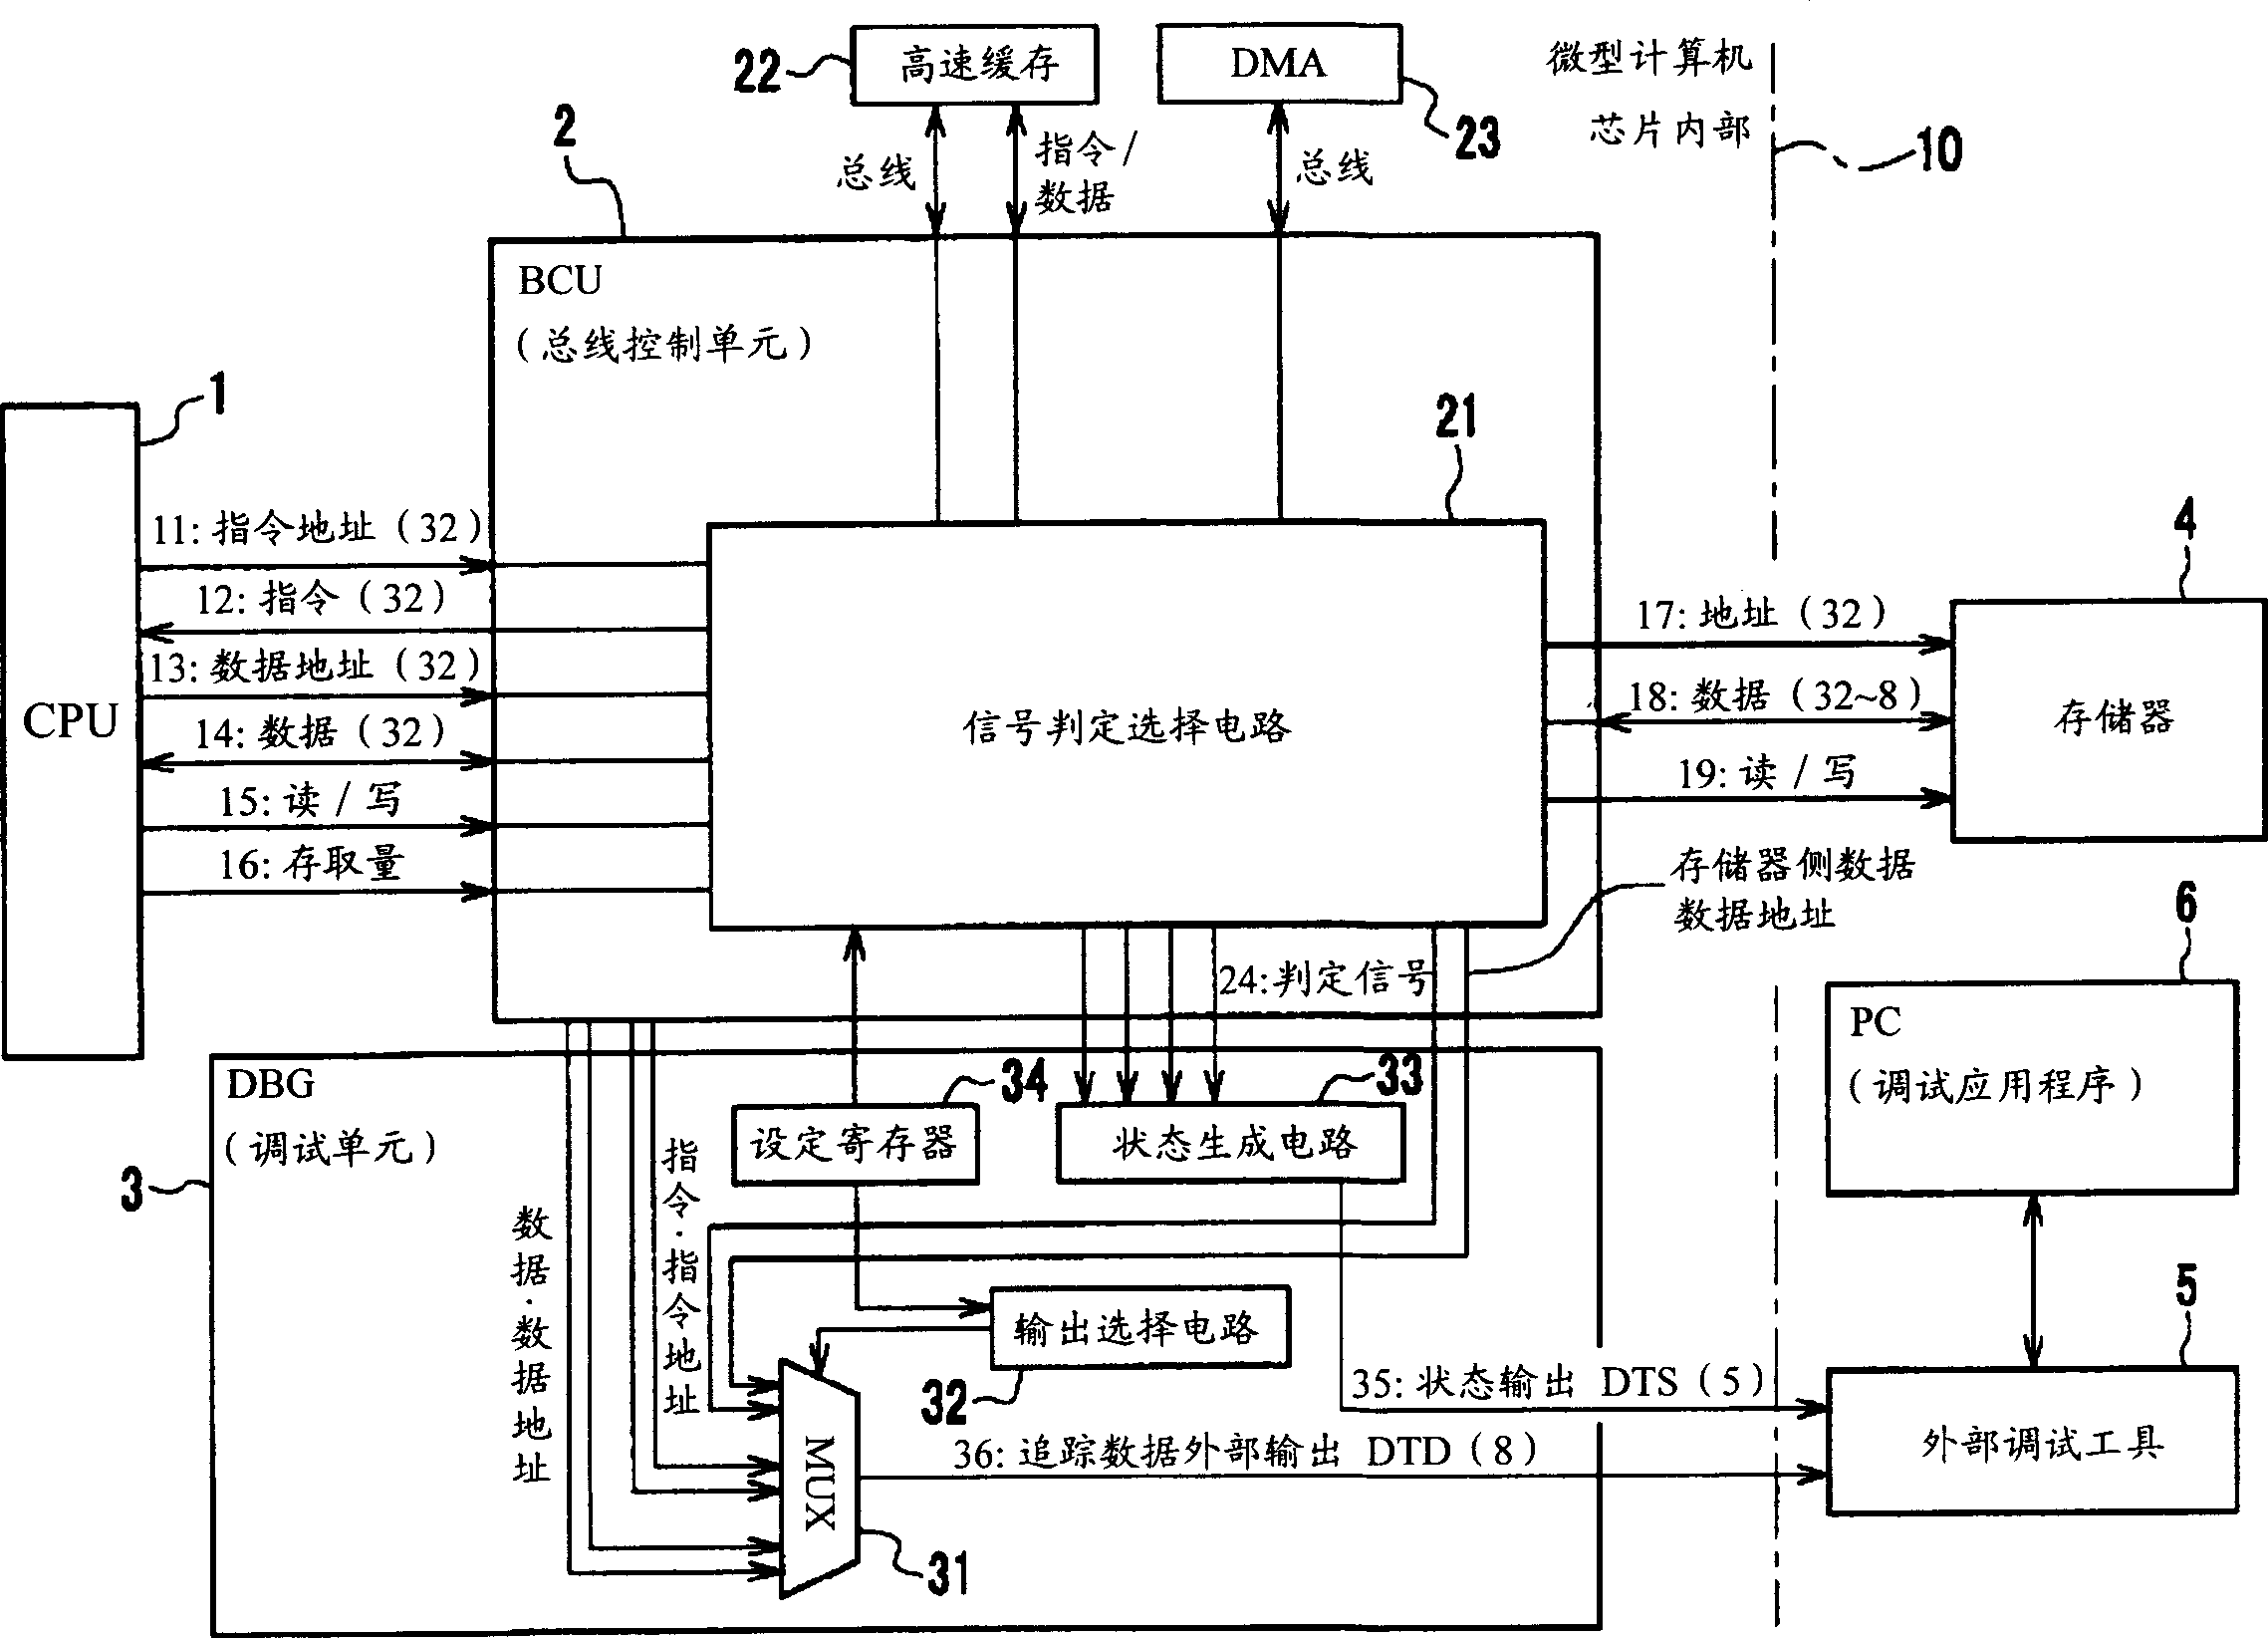 Debugging function built-in micro-computer